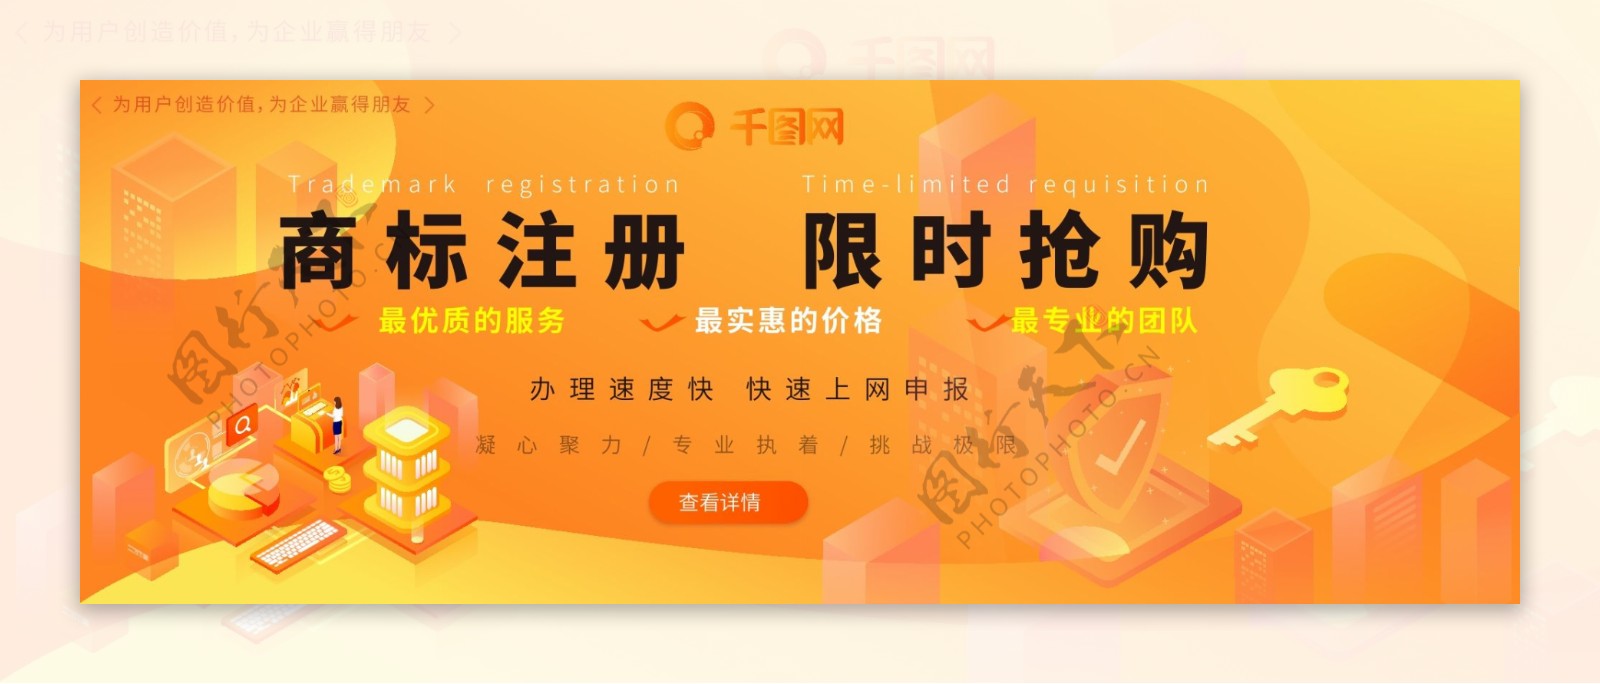 2.5d橙黄色商标注册公司banner